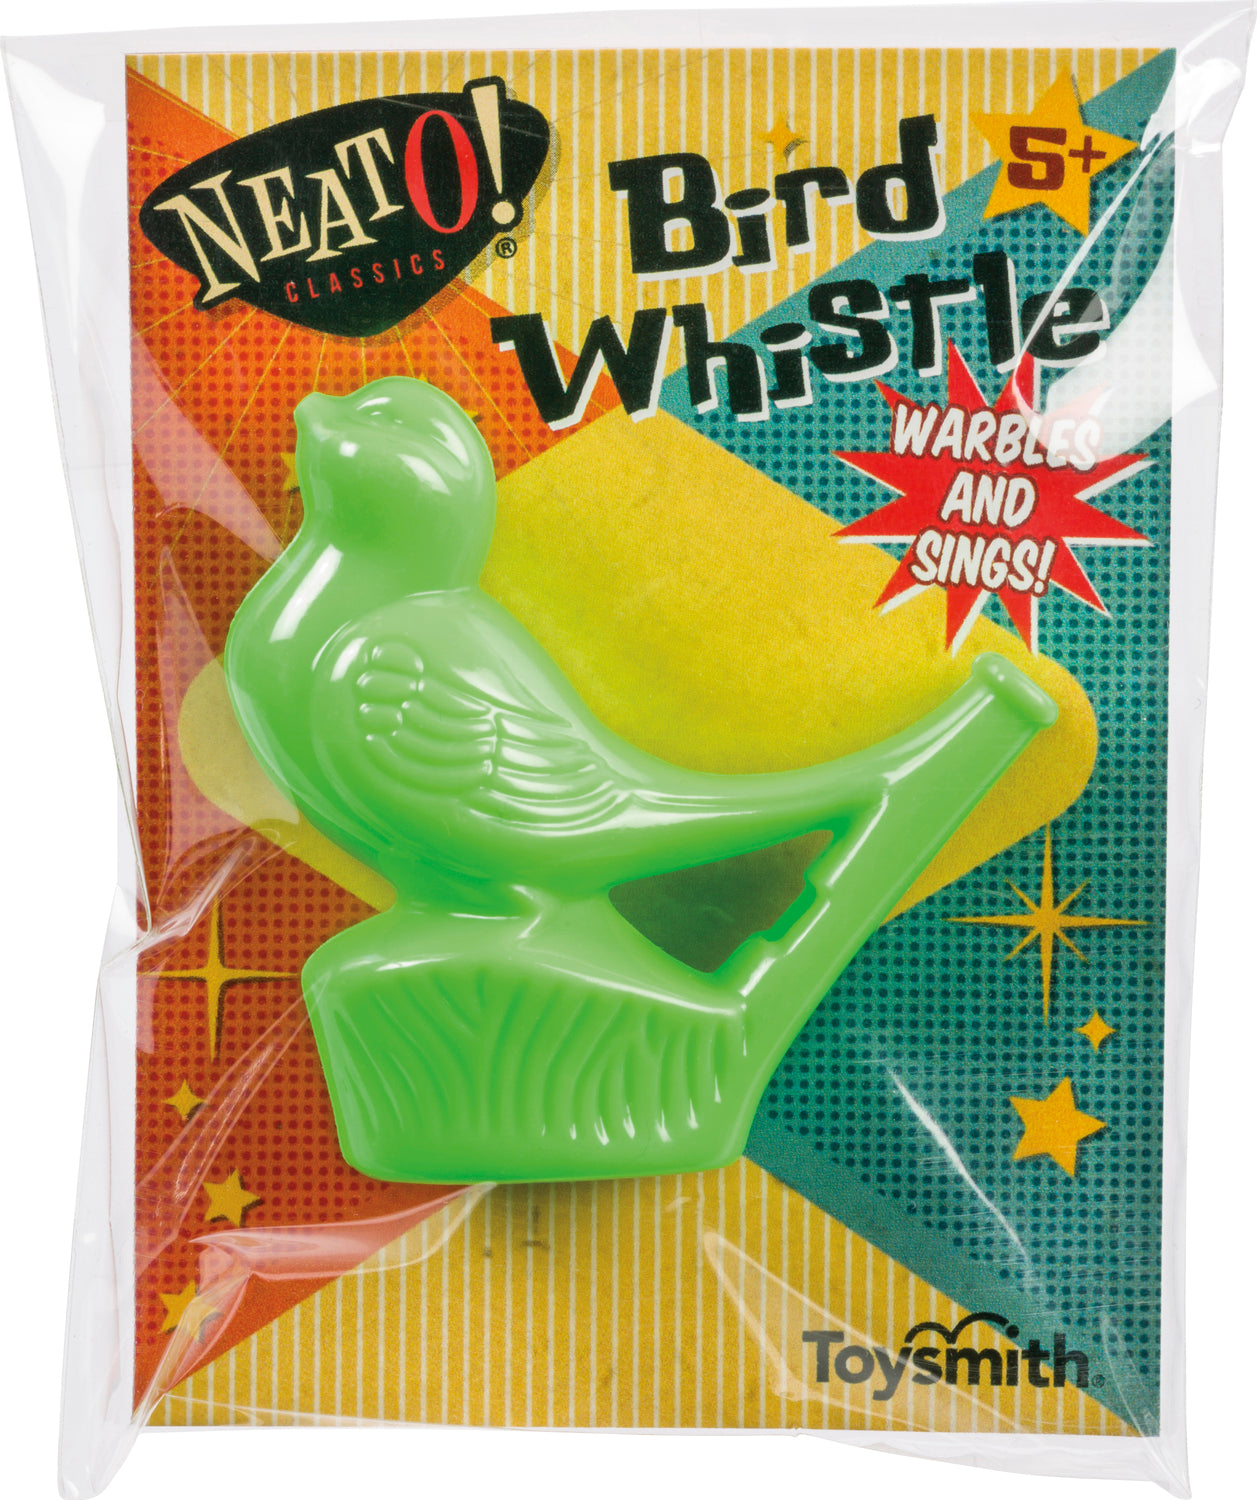 Neato! Bird Whistle (Assorted)